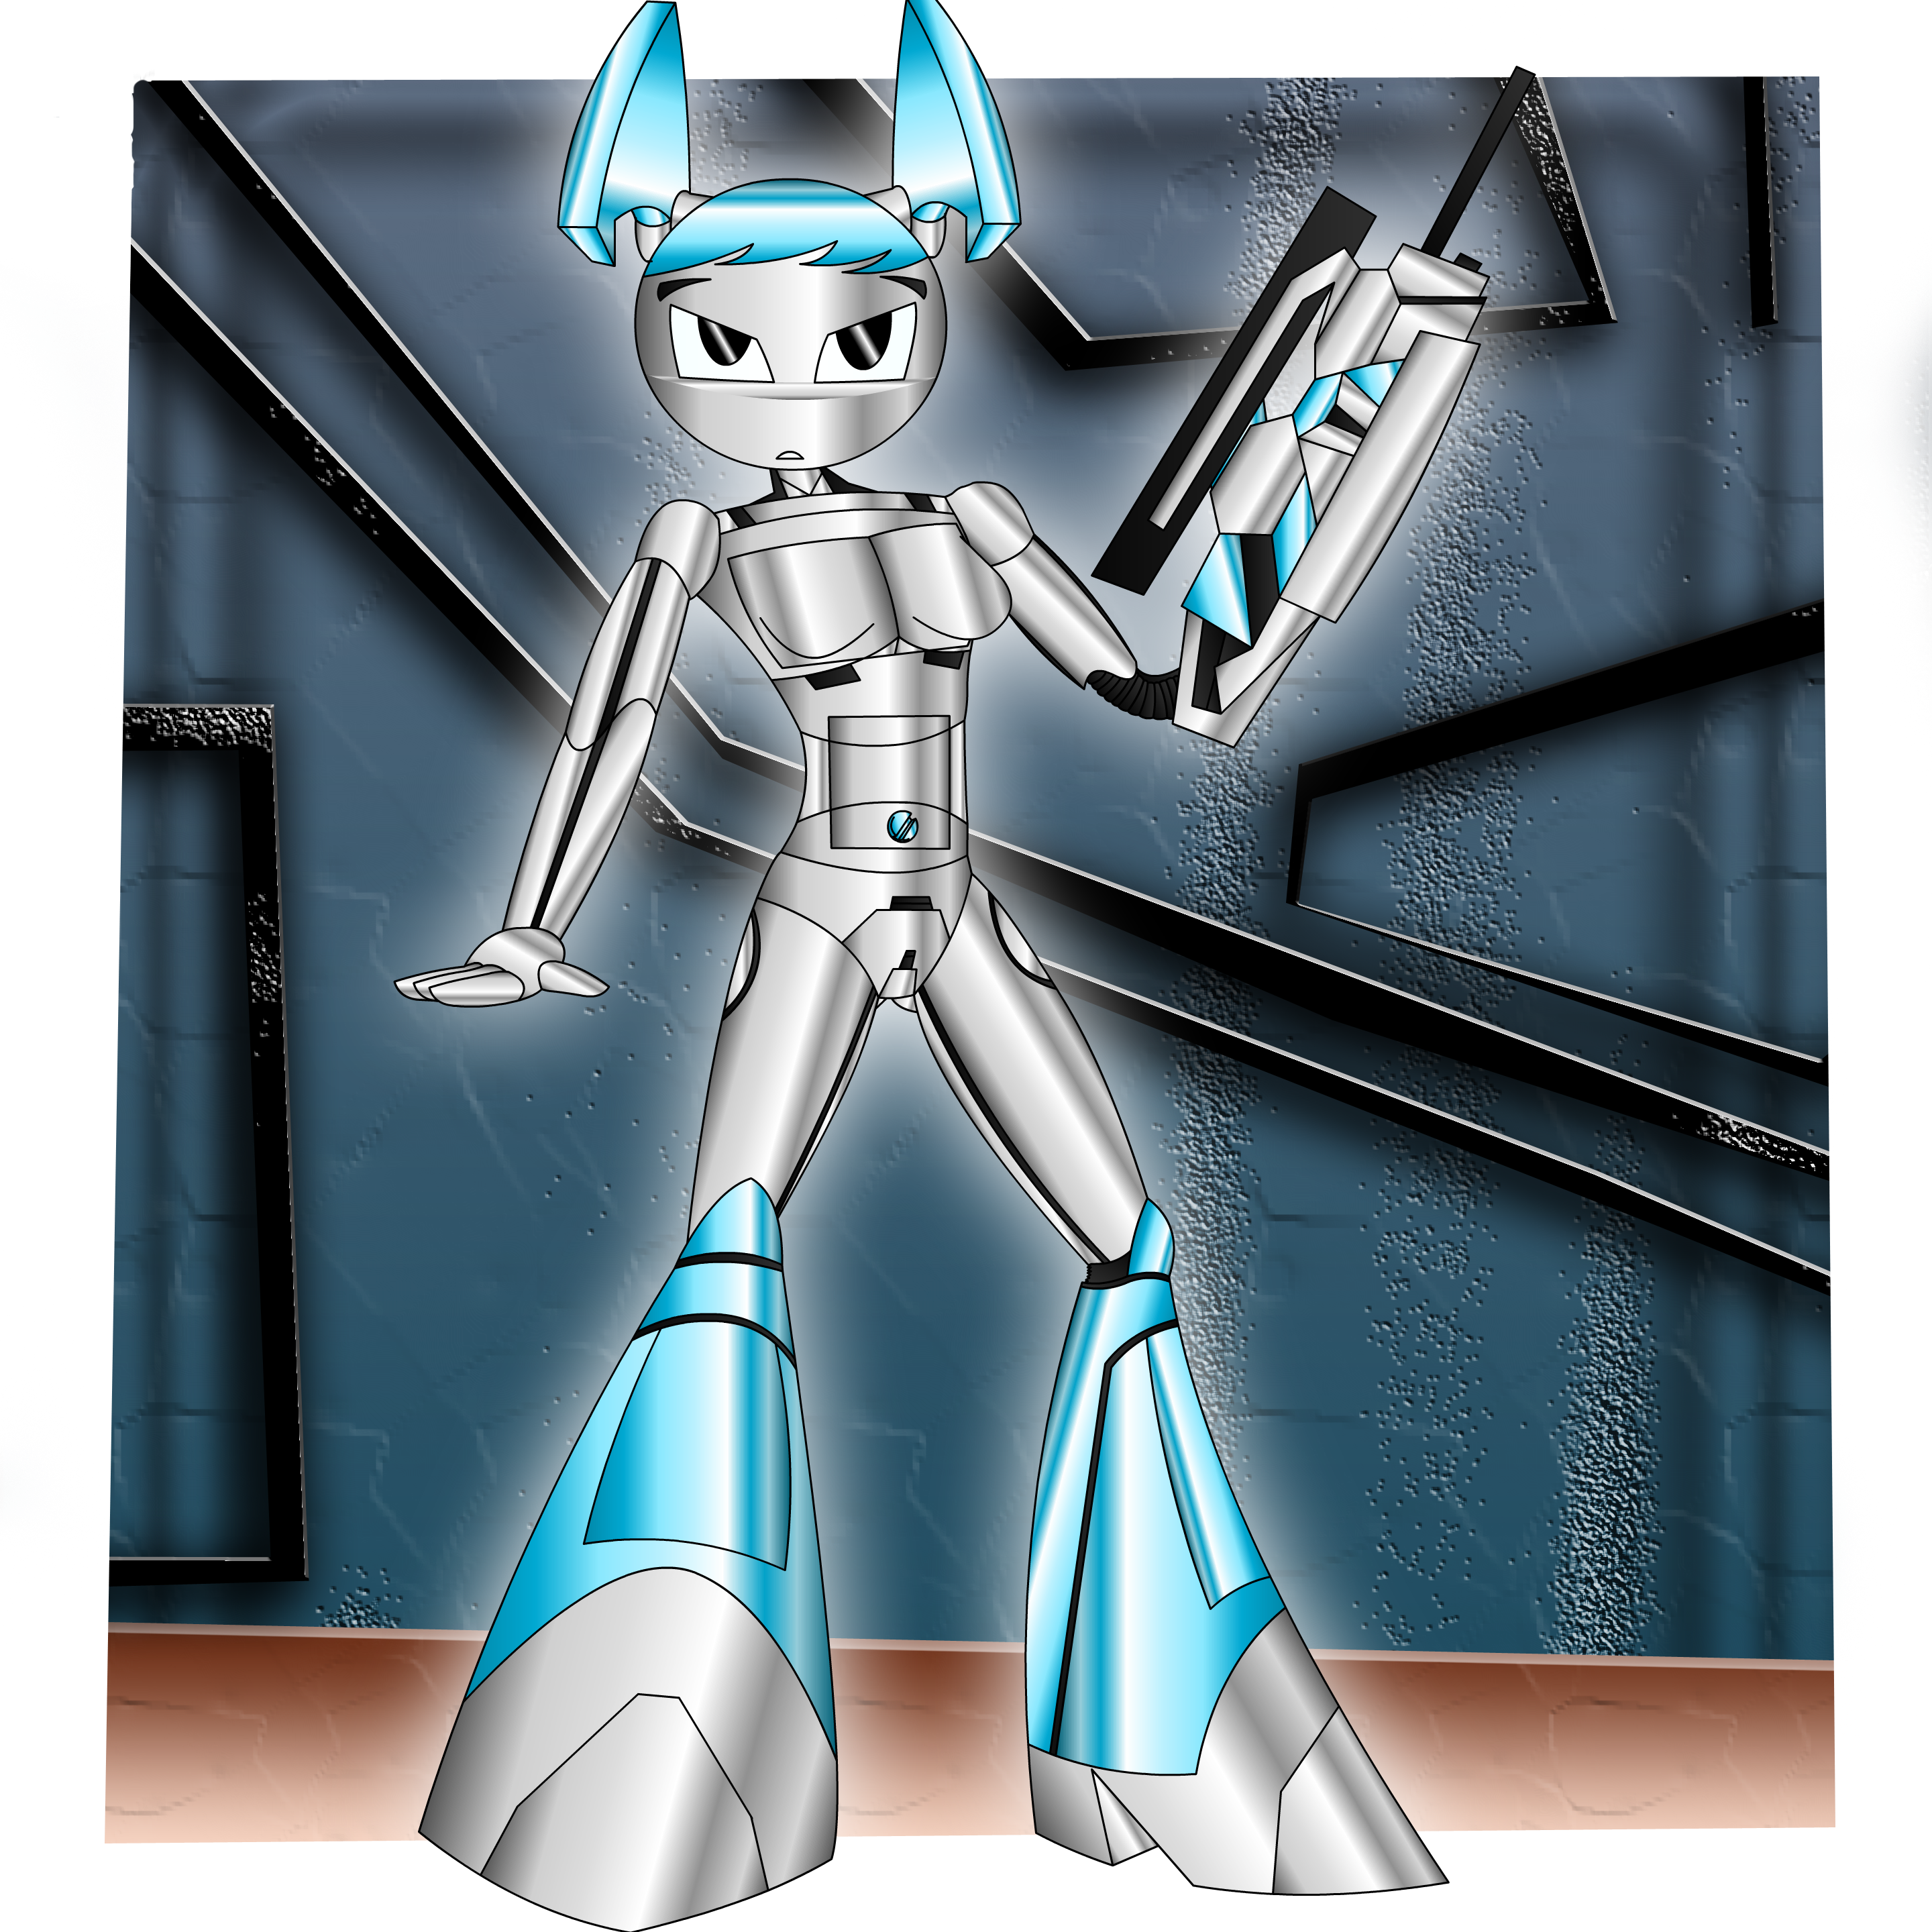 Jenny Wakeman Meet Robot Block by Lolacniaemaketoolfan on DeviantArt